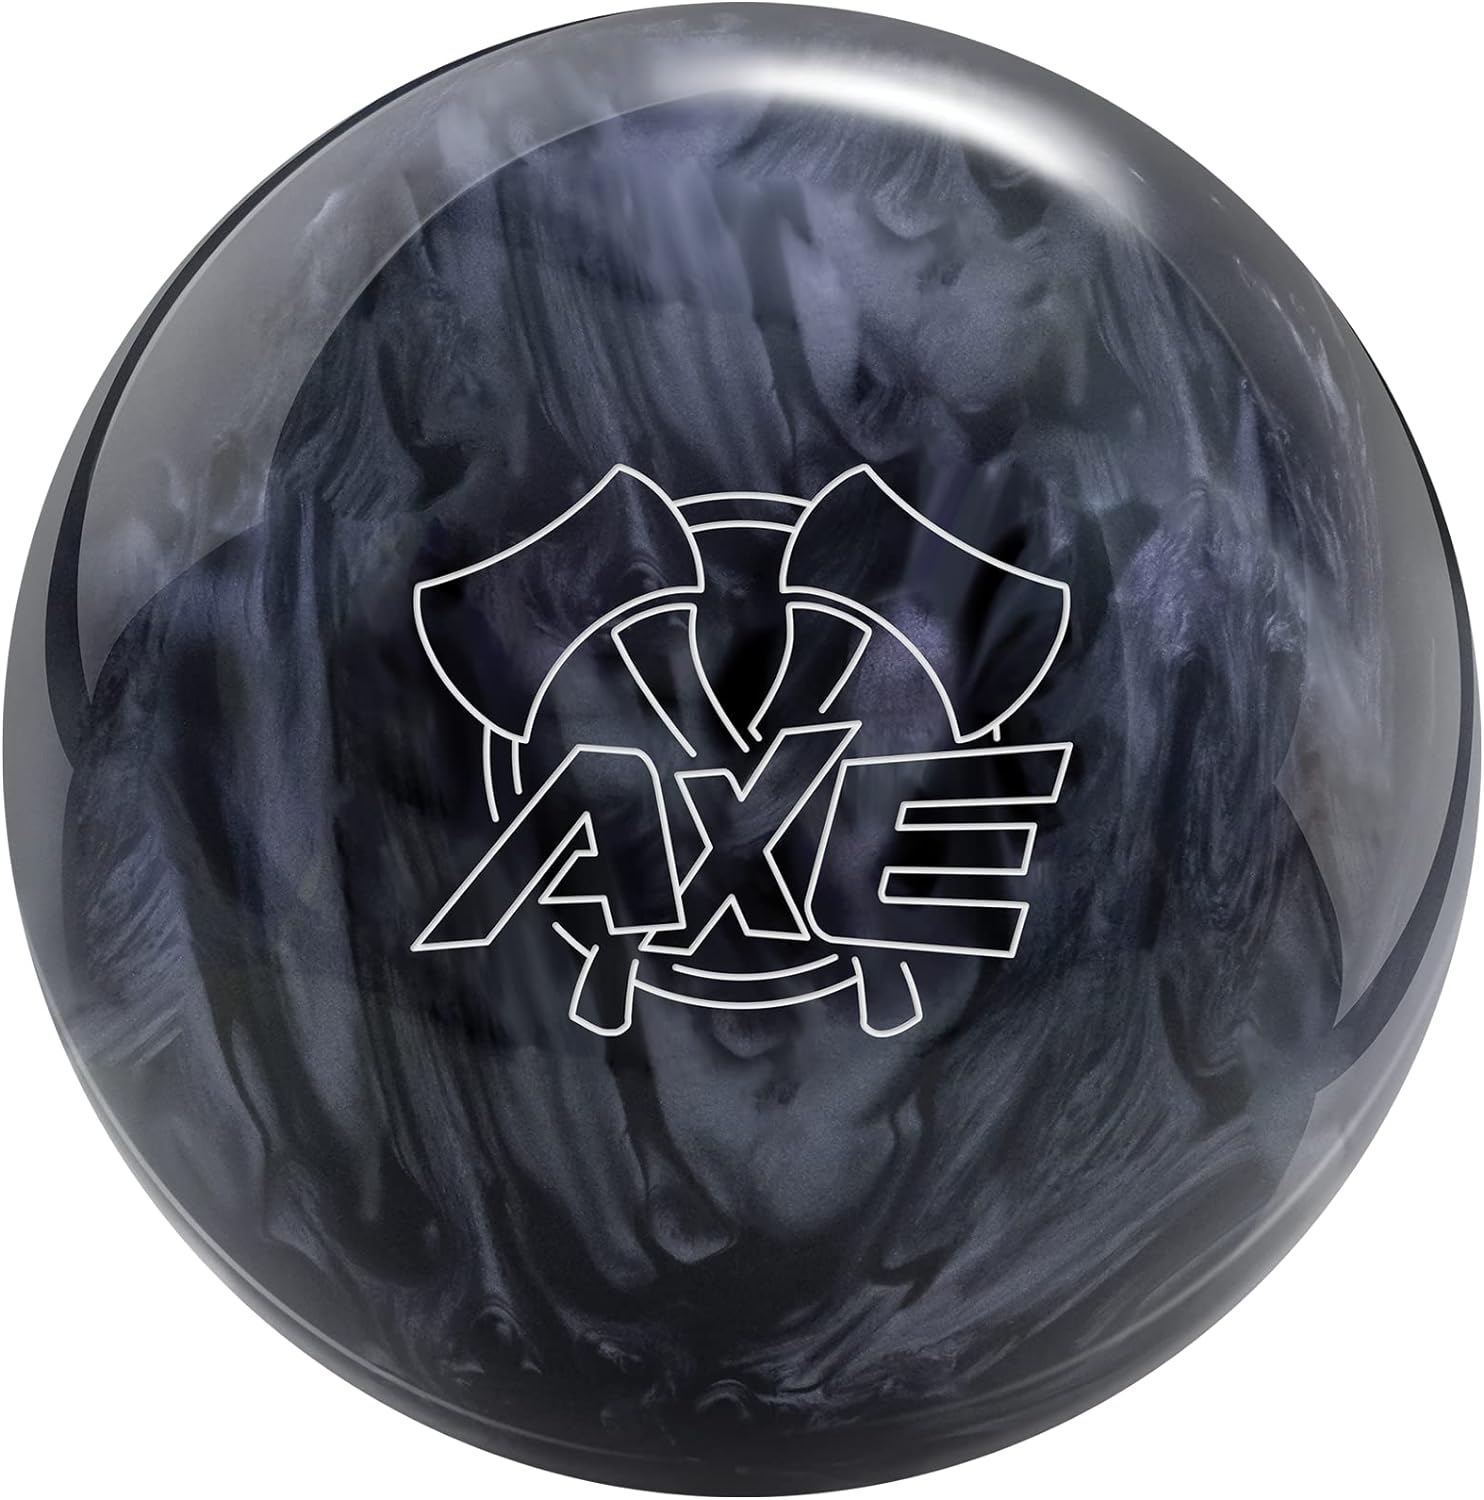 Hammer Axe Black/Smoke Bowling Ball